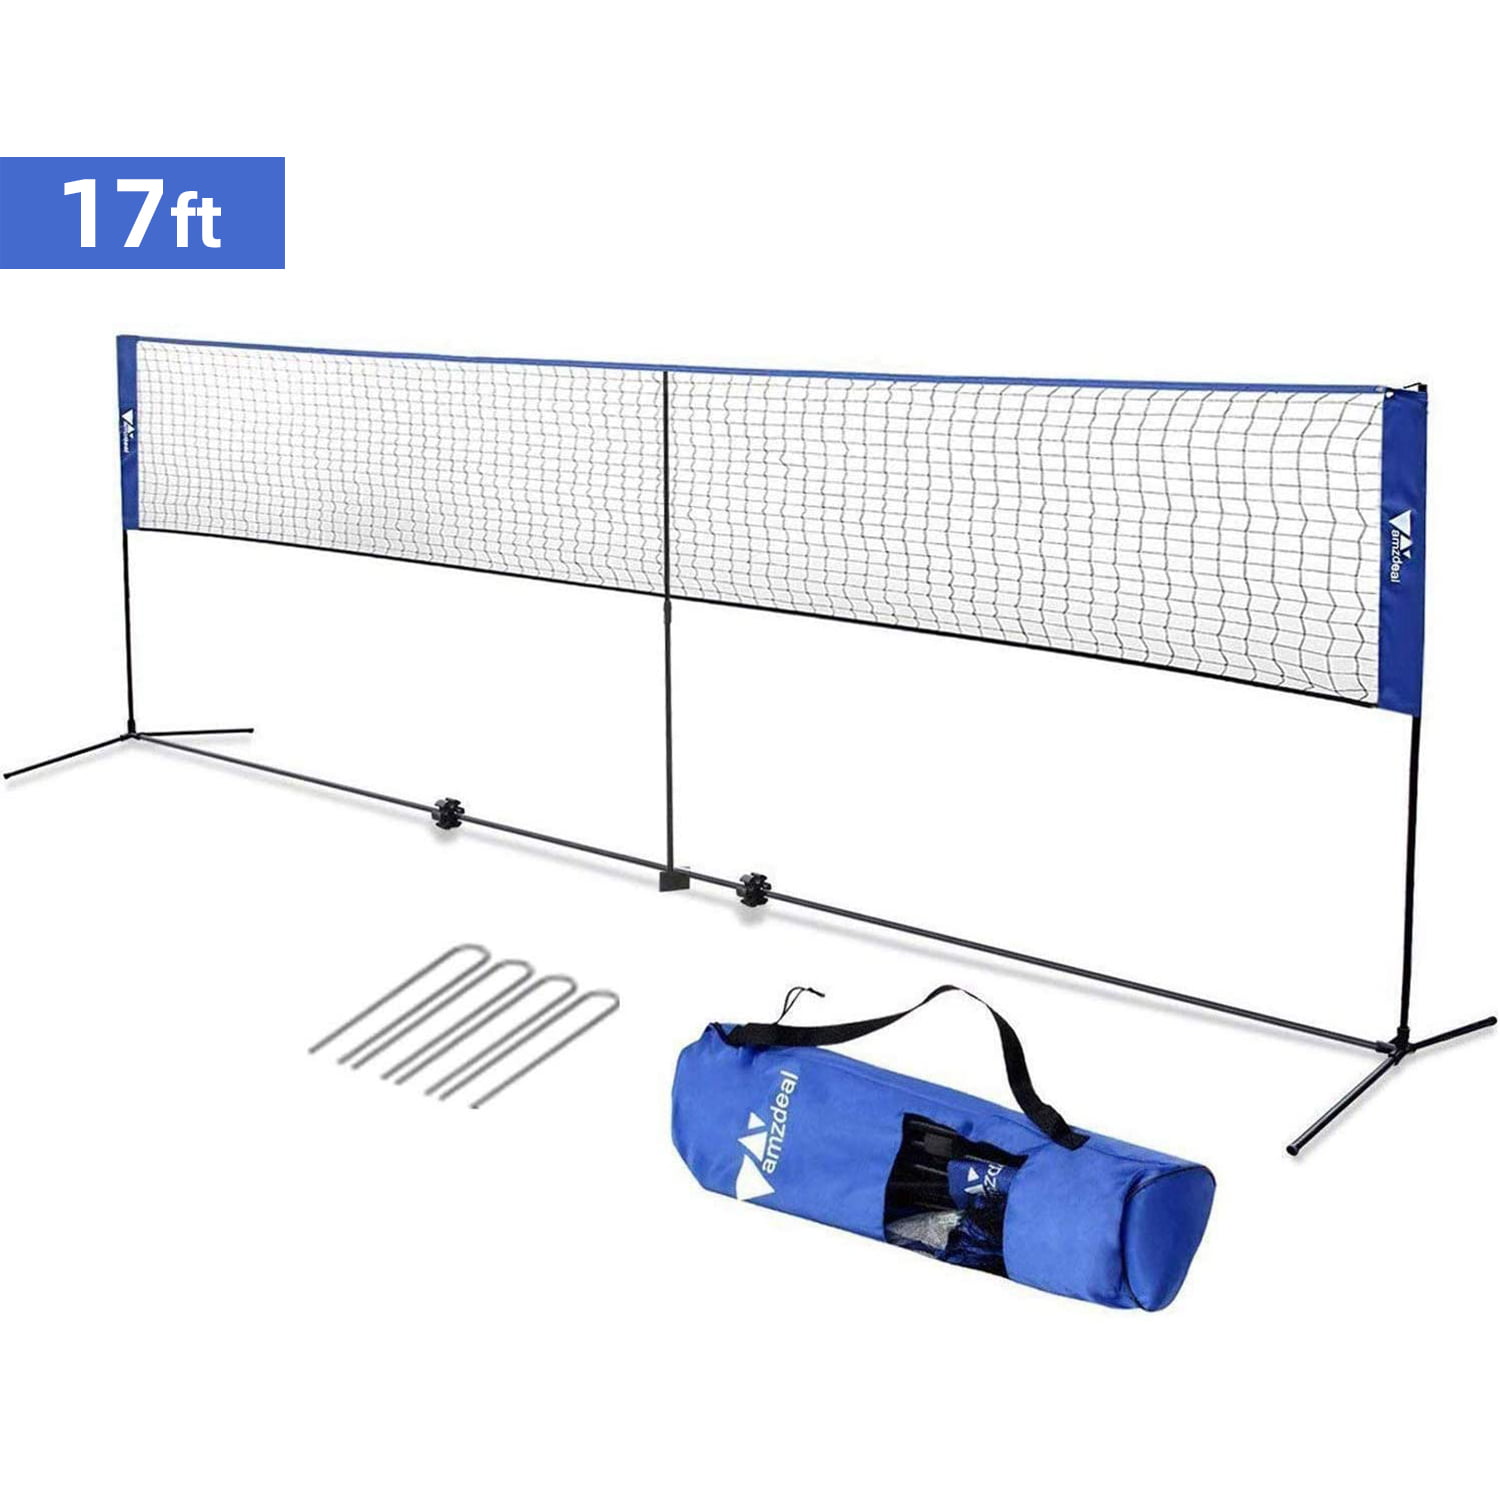 Portable Badminton Volleyball Tennis Net Standard Training Outdoor Garden Sports 